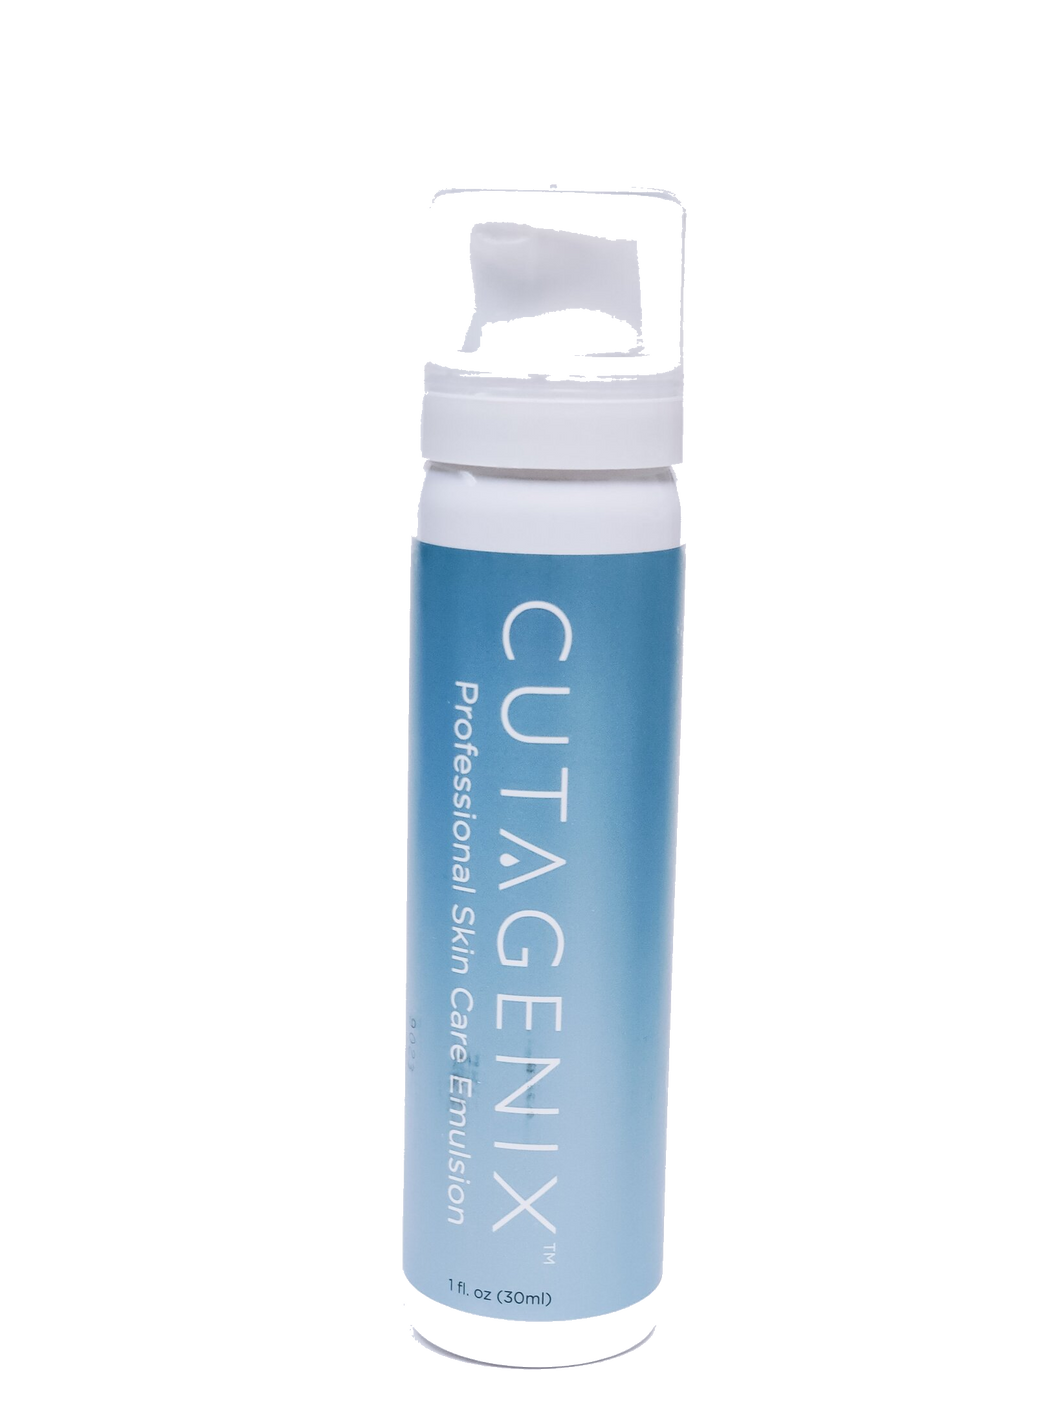 Cutagenix Professional Skin Care Emulsion